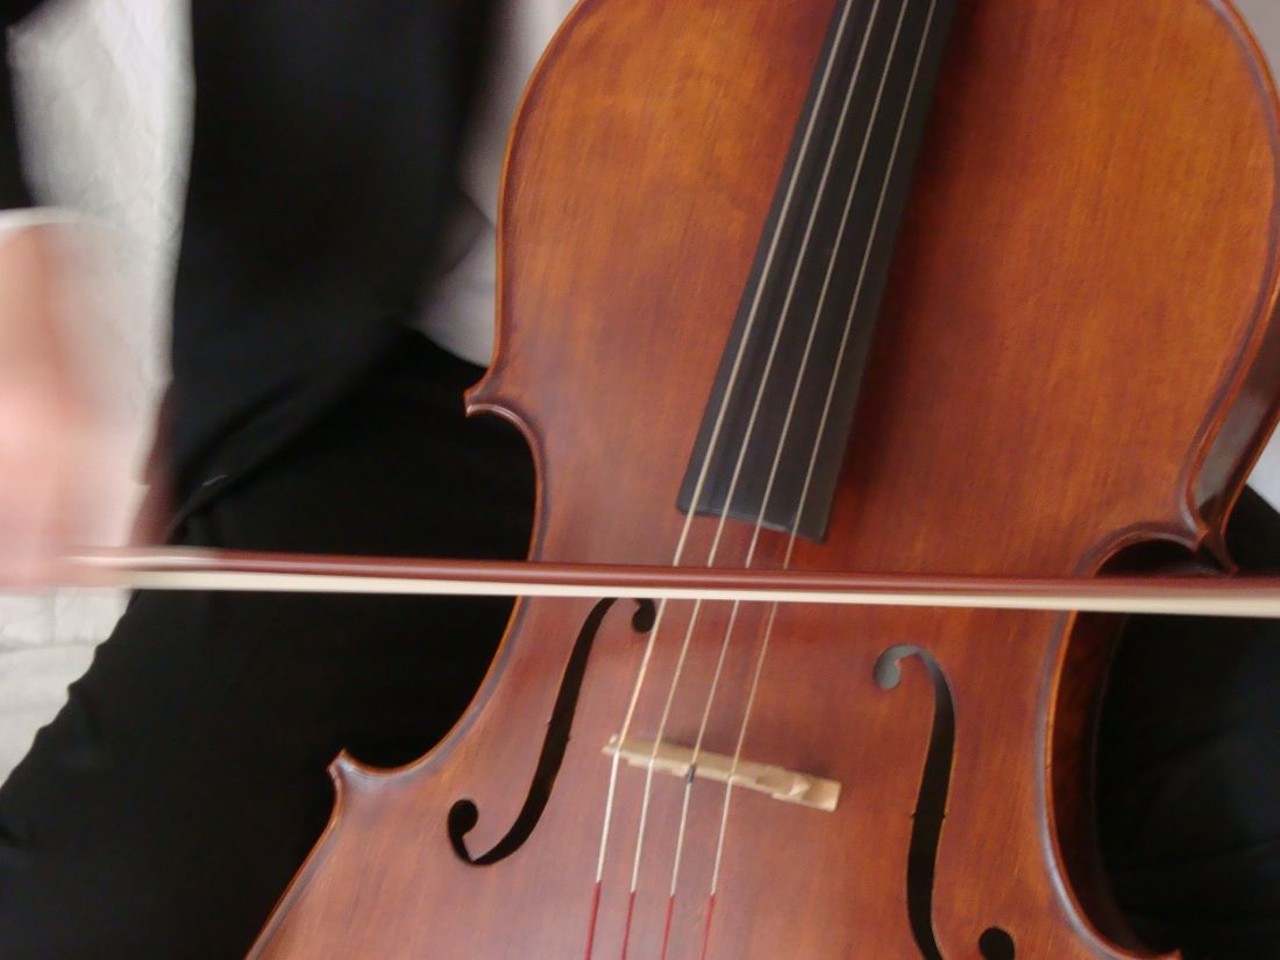  i Cellisti 2019
Fri, Jan. 11
Photo via Wikimedia Commons